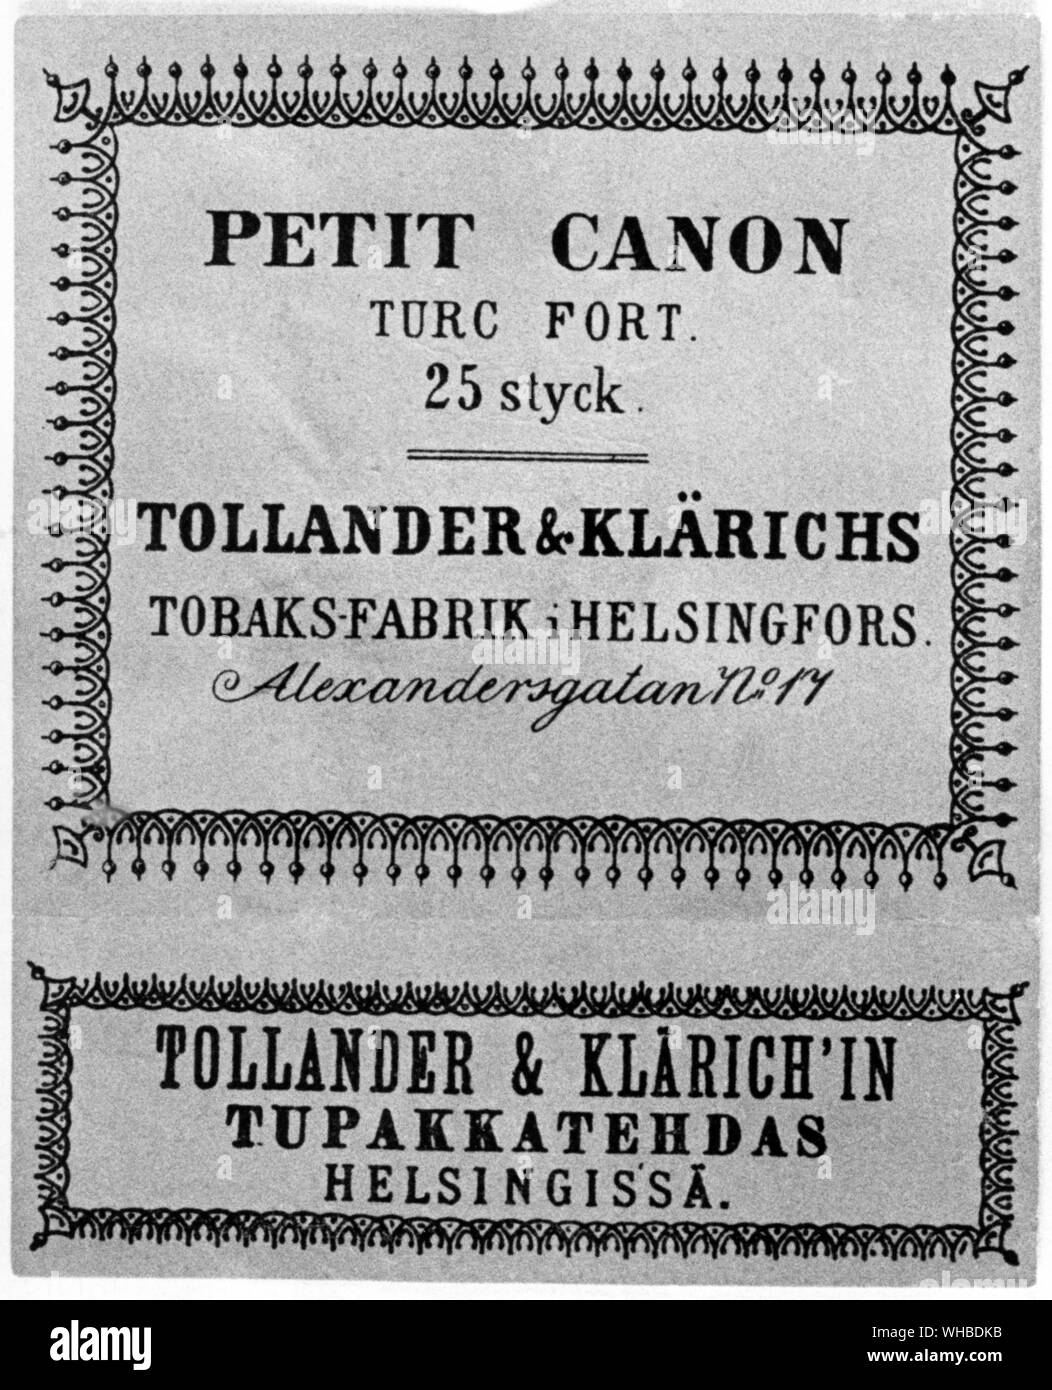 Cigarette packet 1860 - Petit Canon Turc Fort 25 styck - Tollander & Klarichs Tobaks-fabrik i Helsingfors - Alexandersgatan No. 17 - Tollander & Klarich'in Tupakkatehdas Helsingissa.. Stock Photo